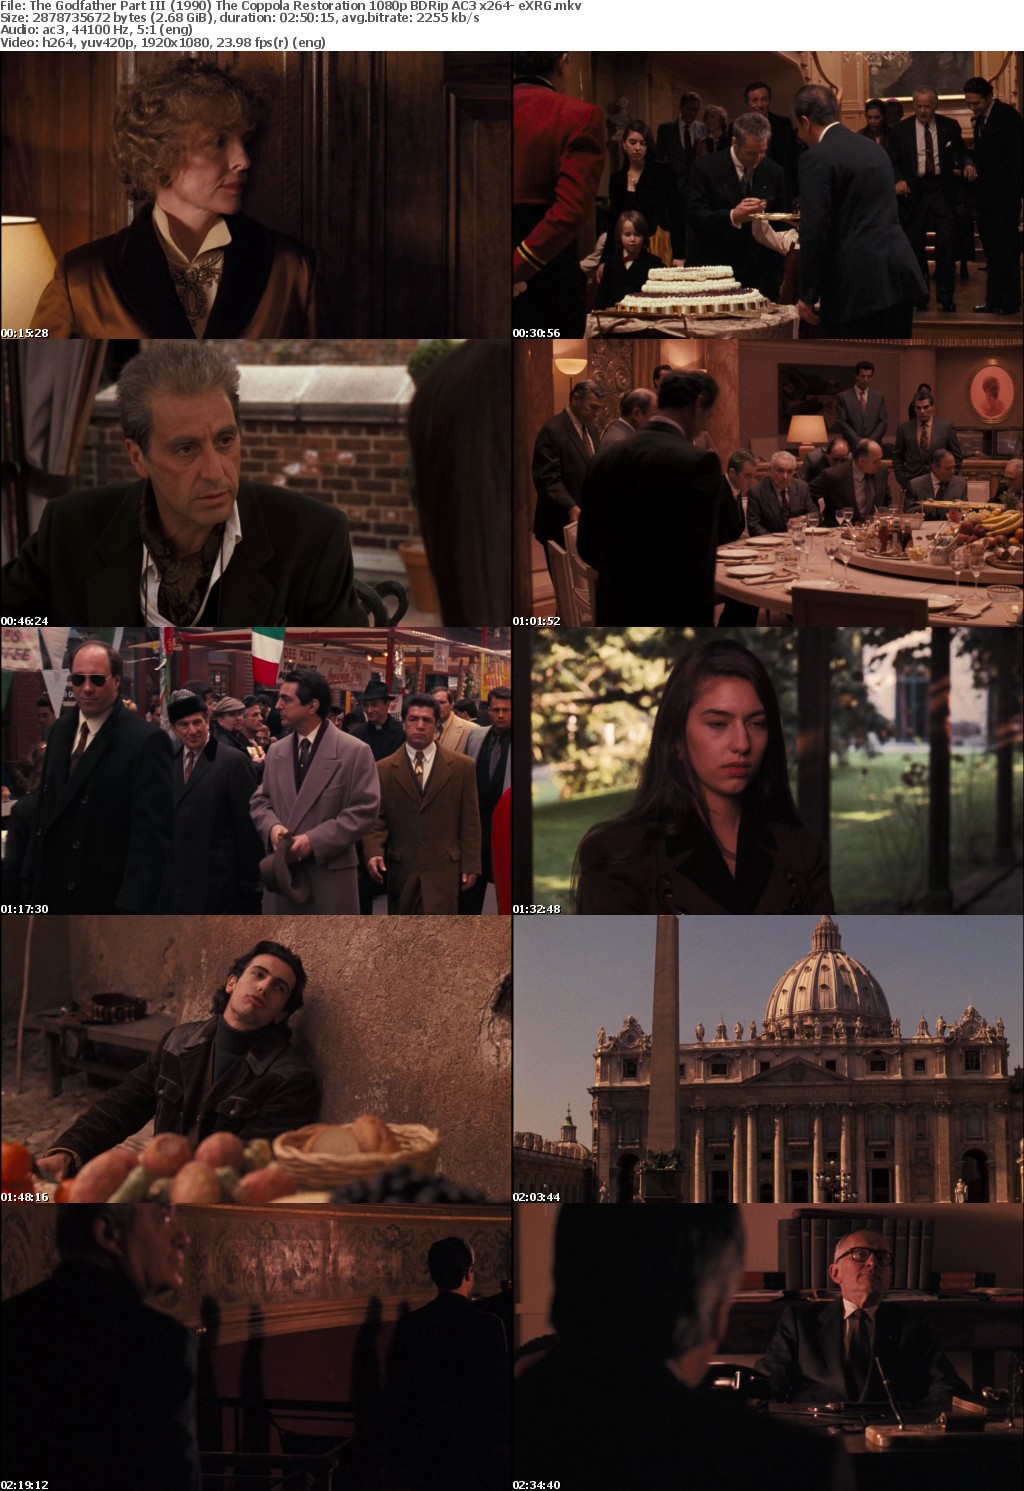 The Godfather Part III (1990) The Coppola Restoration 1080p BDRip AC3 x264- eXRG